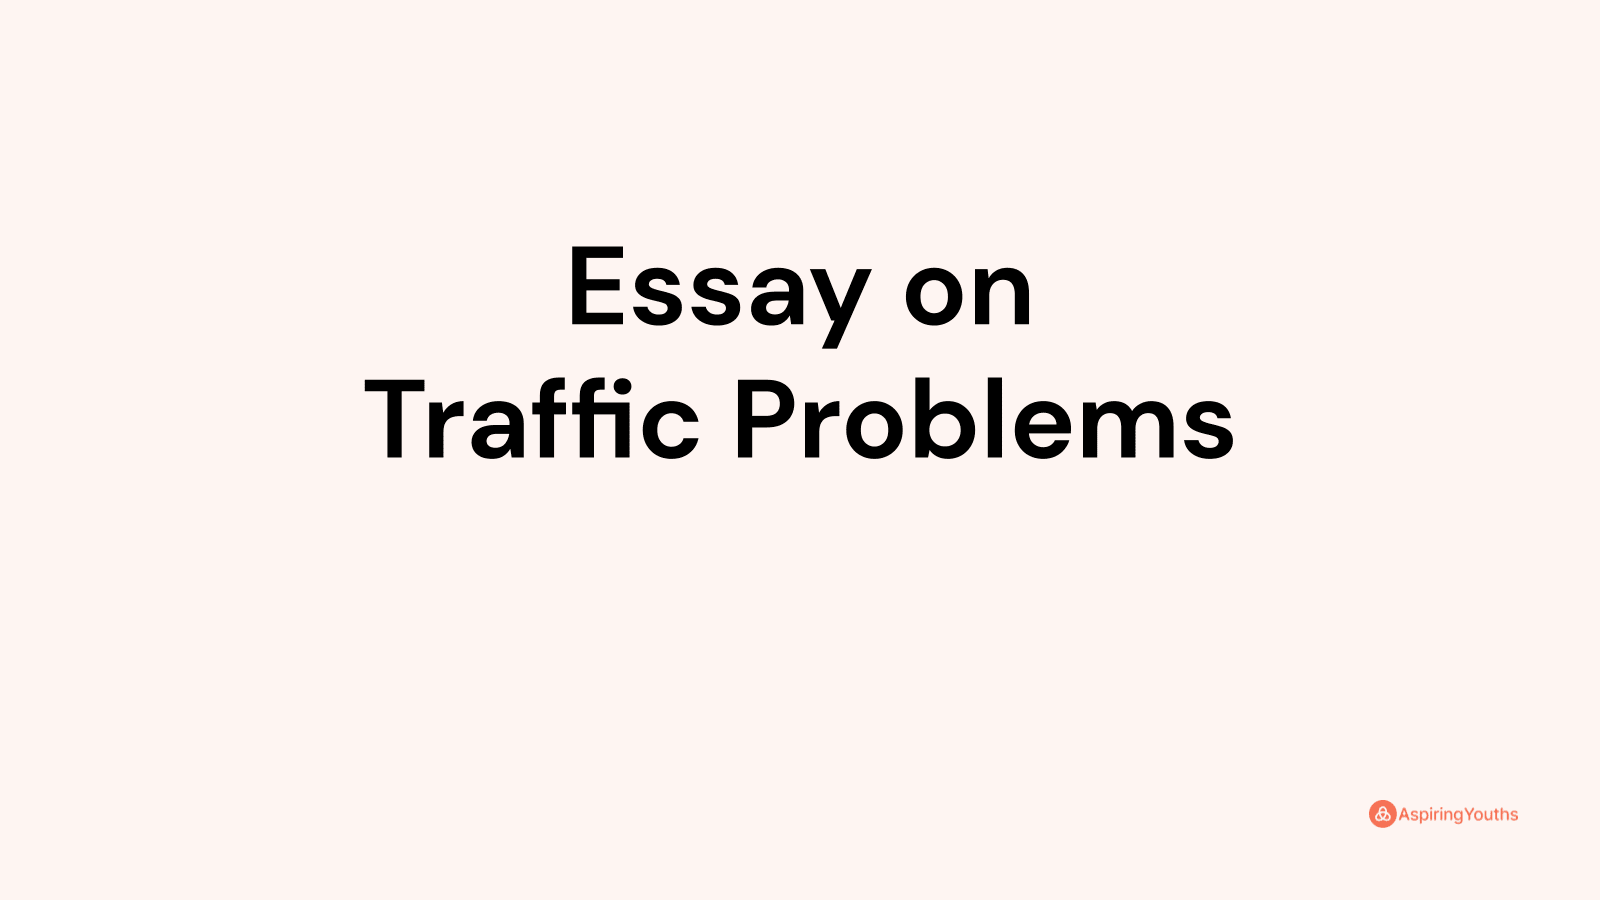 Essay on Traffic Problems